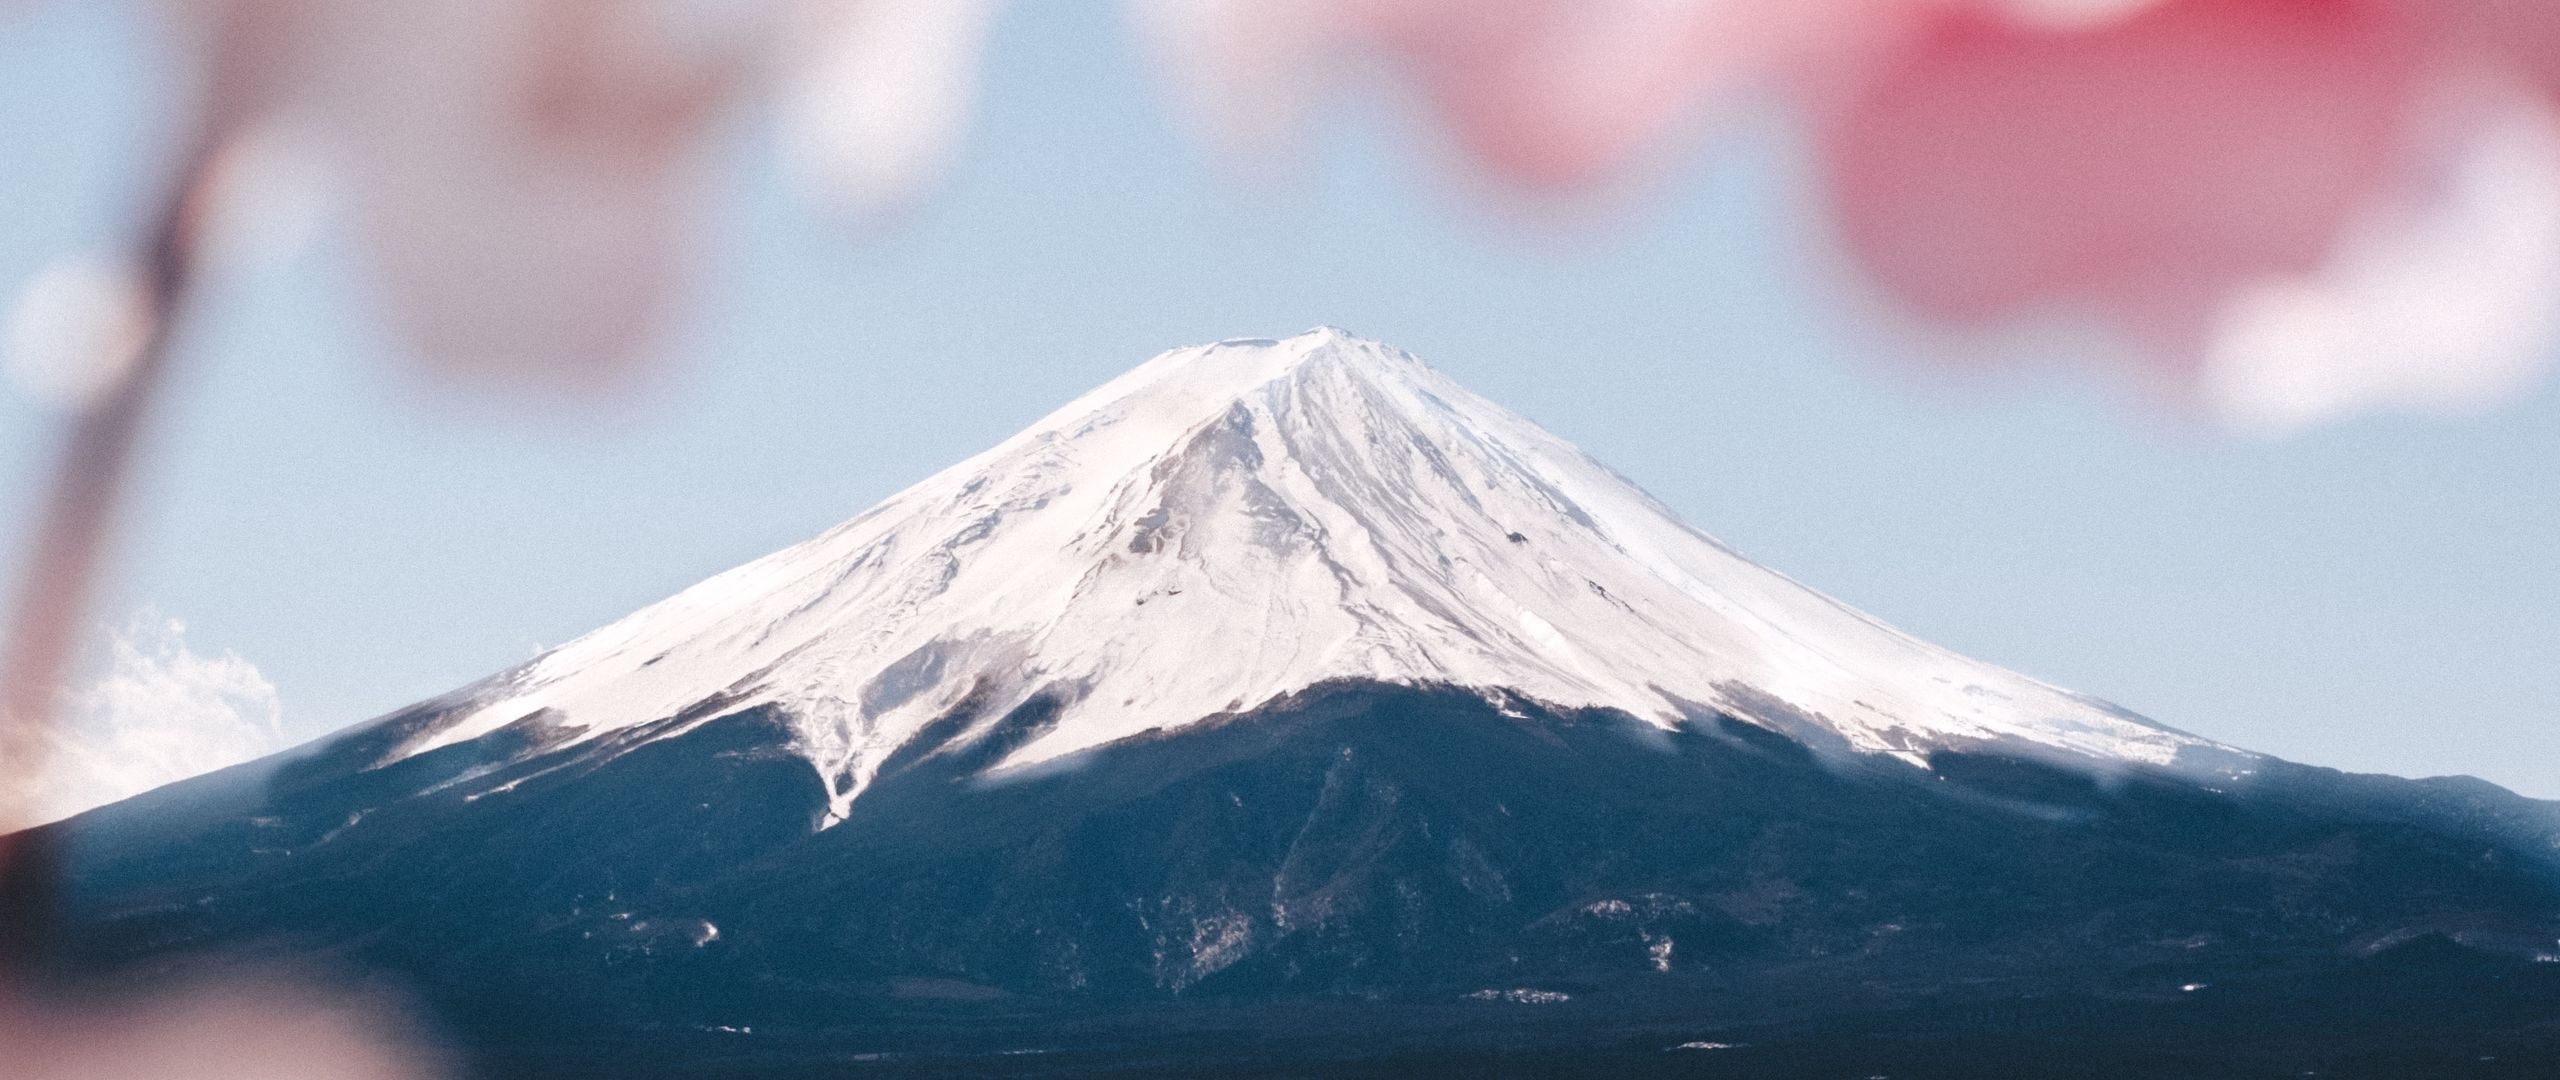 Mount Fuji winter splendor, Snowy landscapes, Breathtaking wallpapers, Captivating views, 2560x1080 Dual Screen Desktop